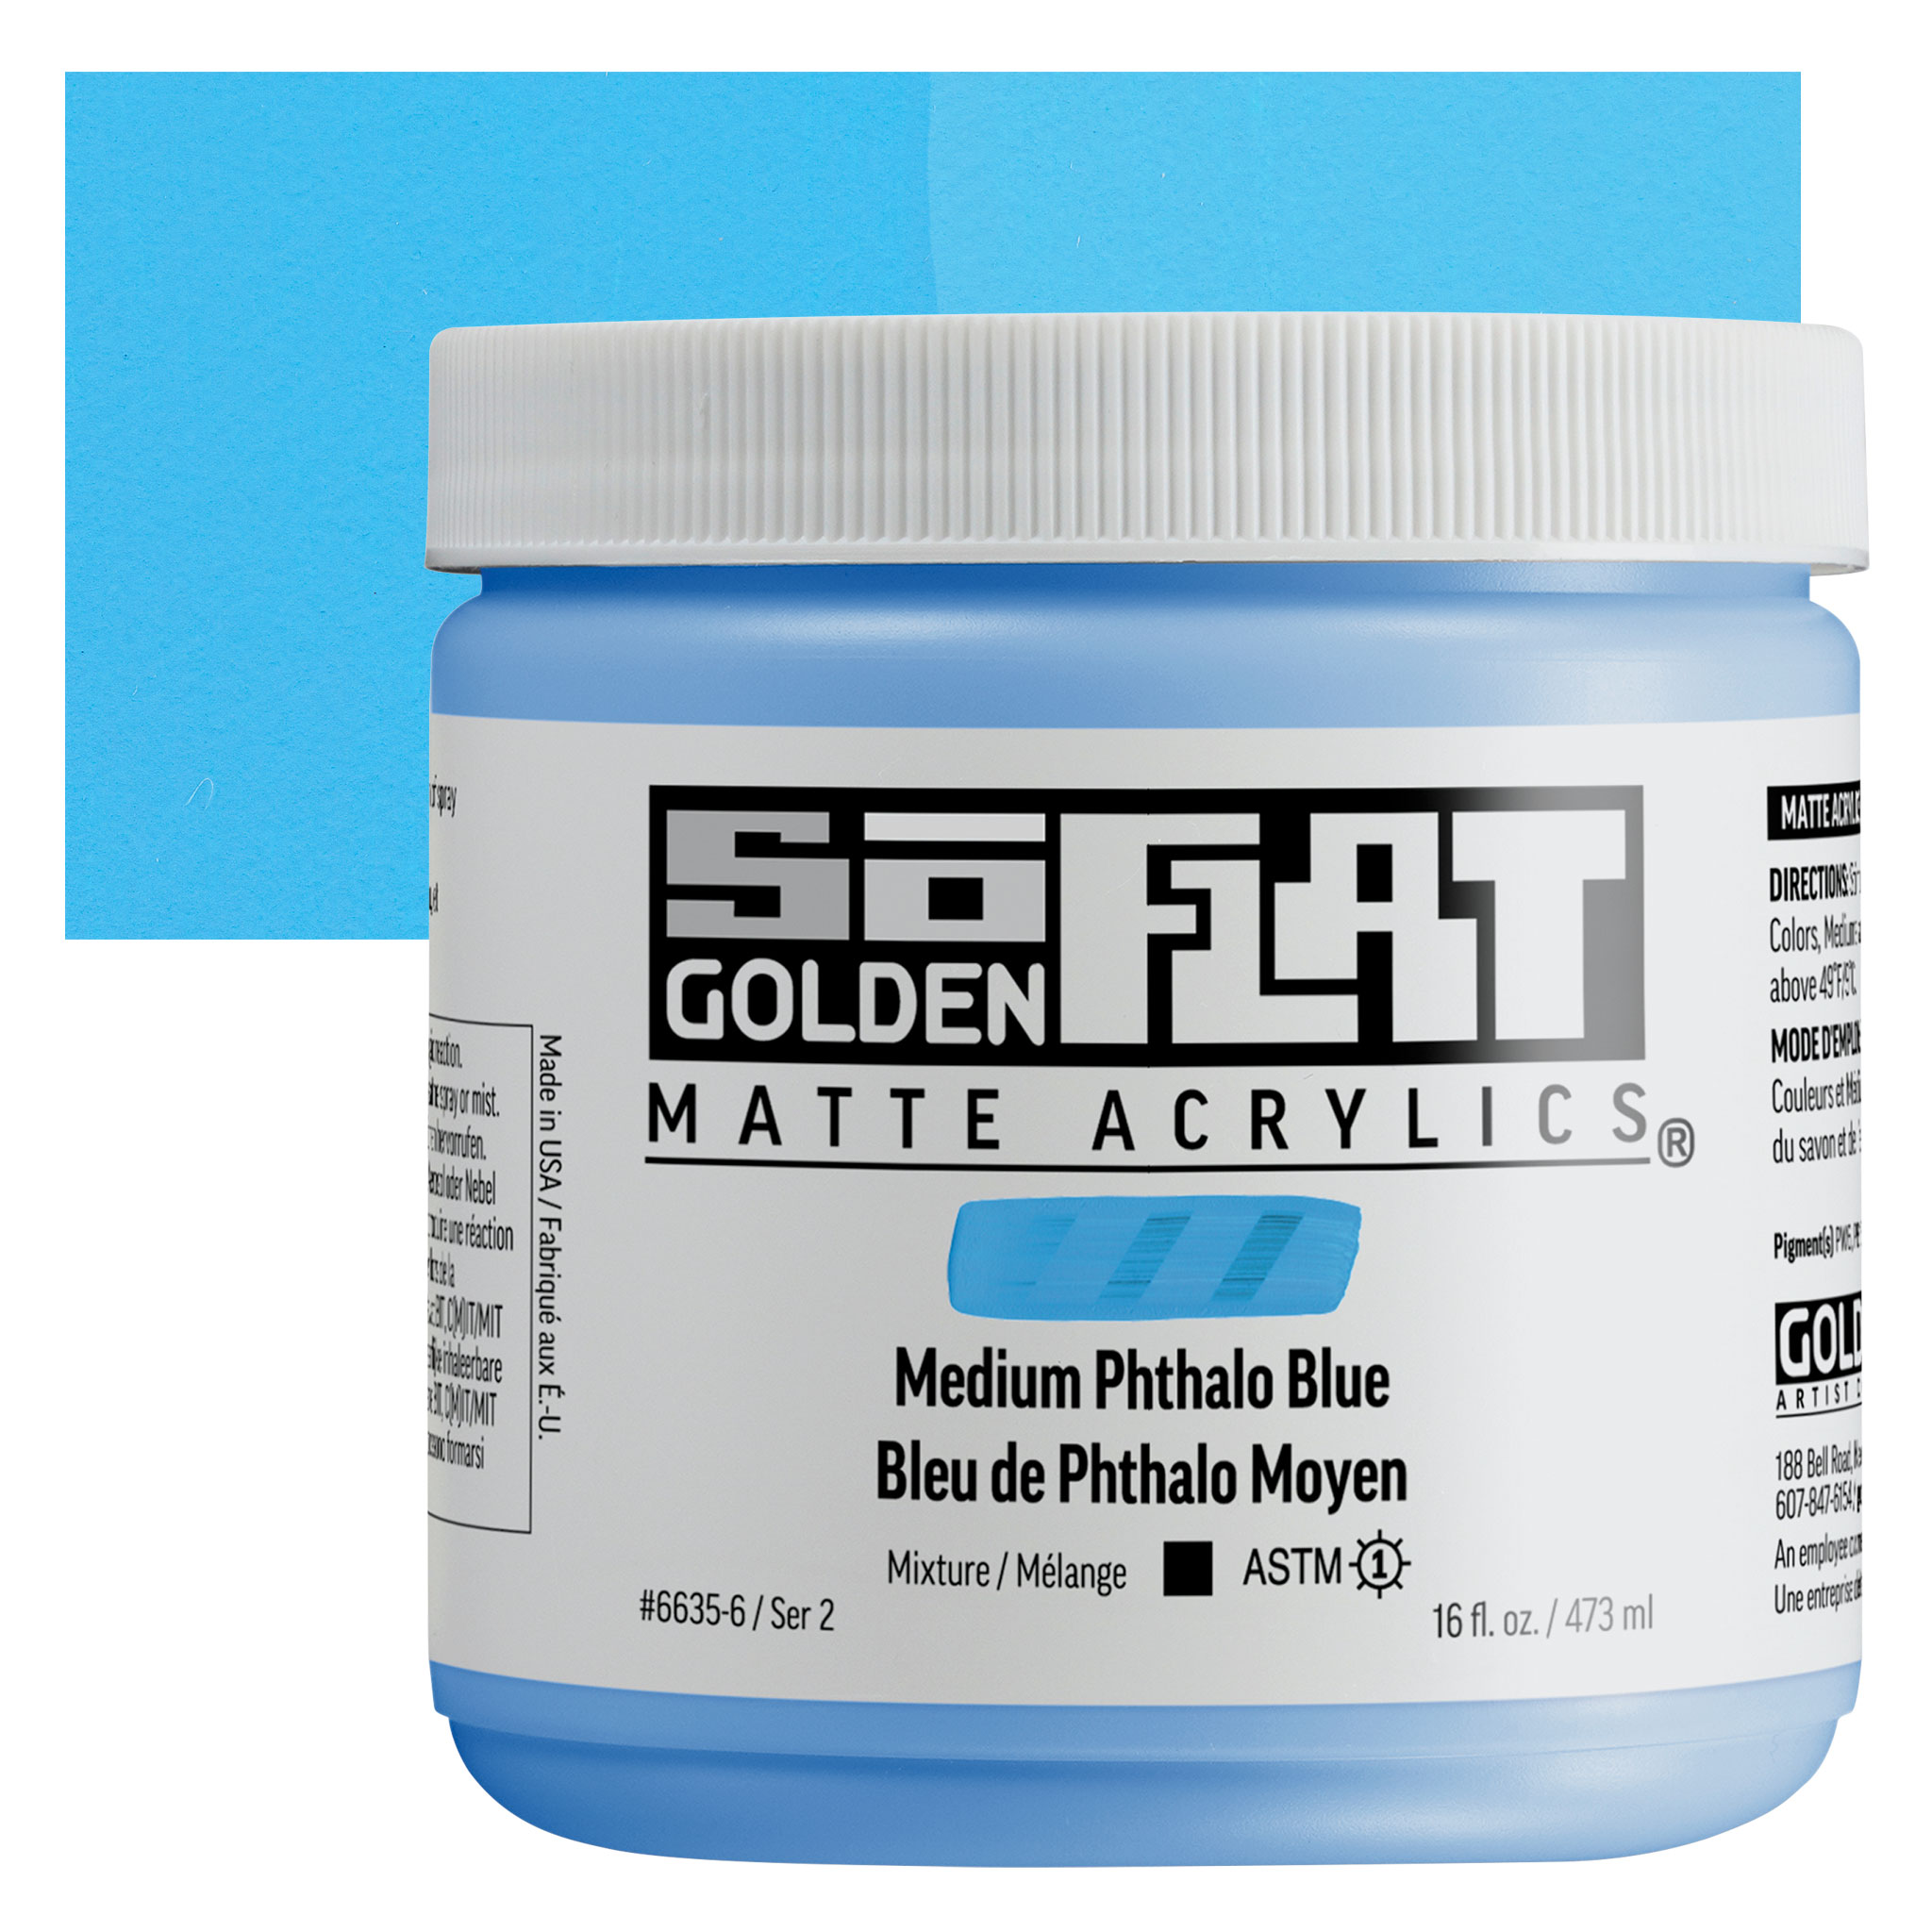 Golden SoFlat Matte Acrylic Paint - Black, 59 ml, Jar